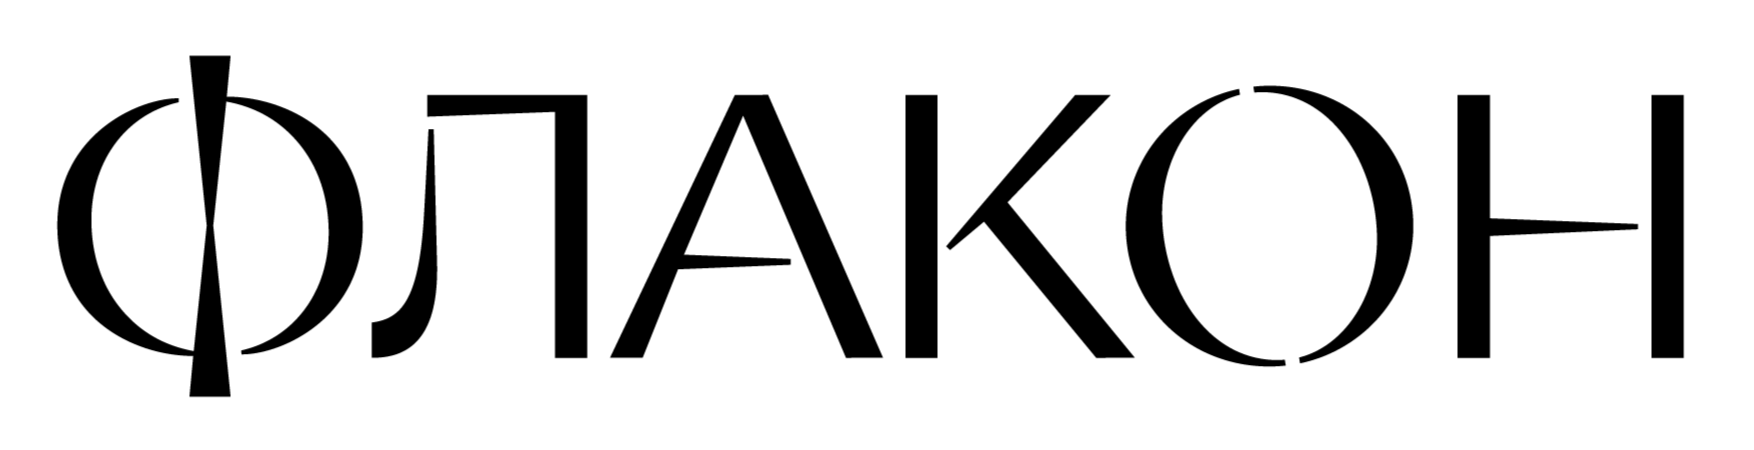 New Logo and Identity for Flacon by Shuka